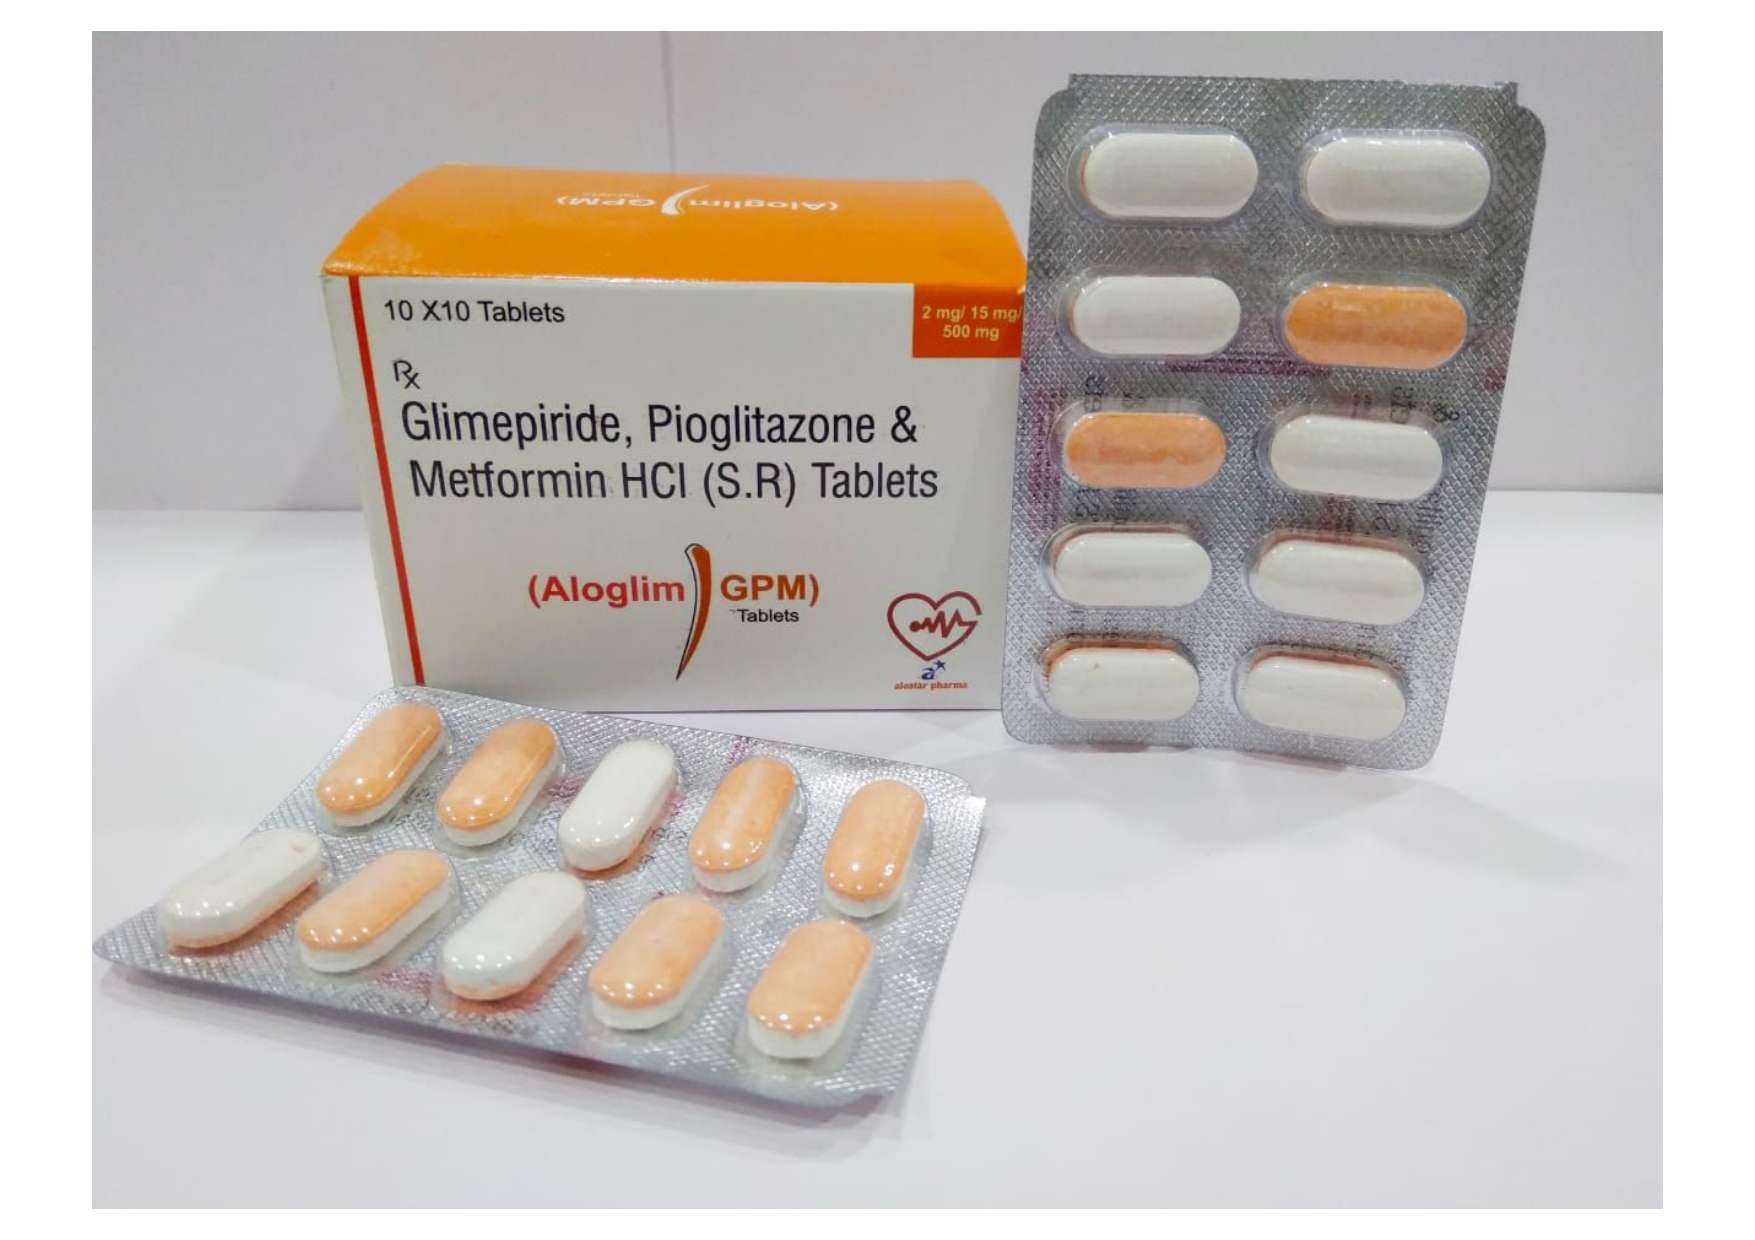 glimepiride, pioglitazone & metformin hydrochloride